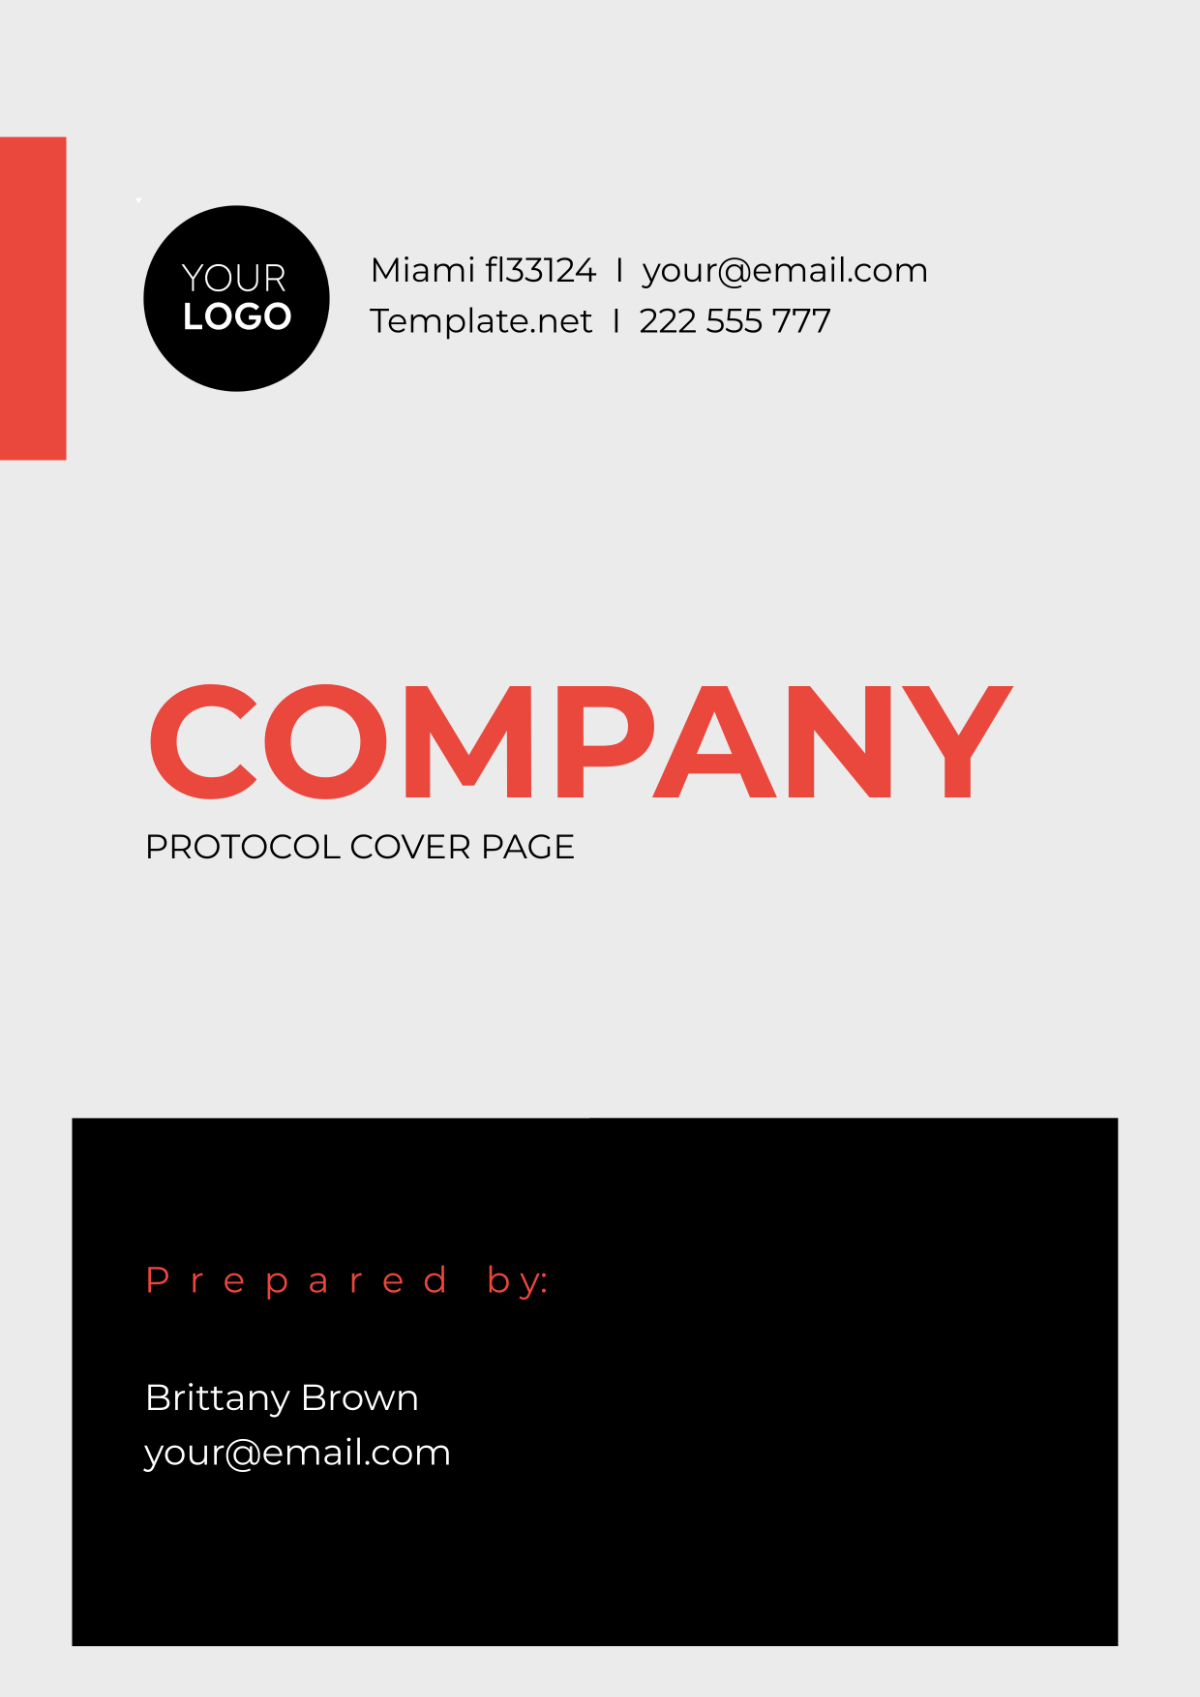 Company Protocol Cover Page Template